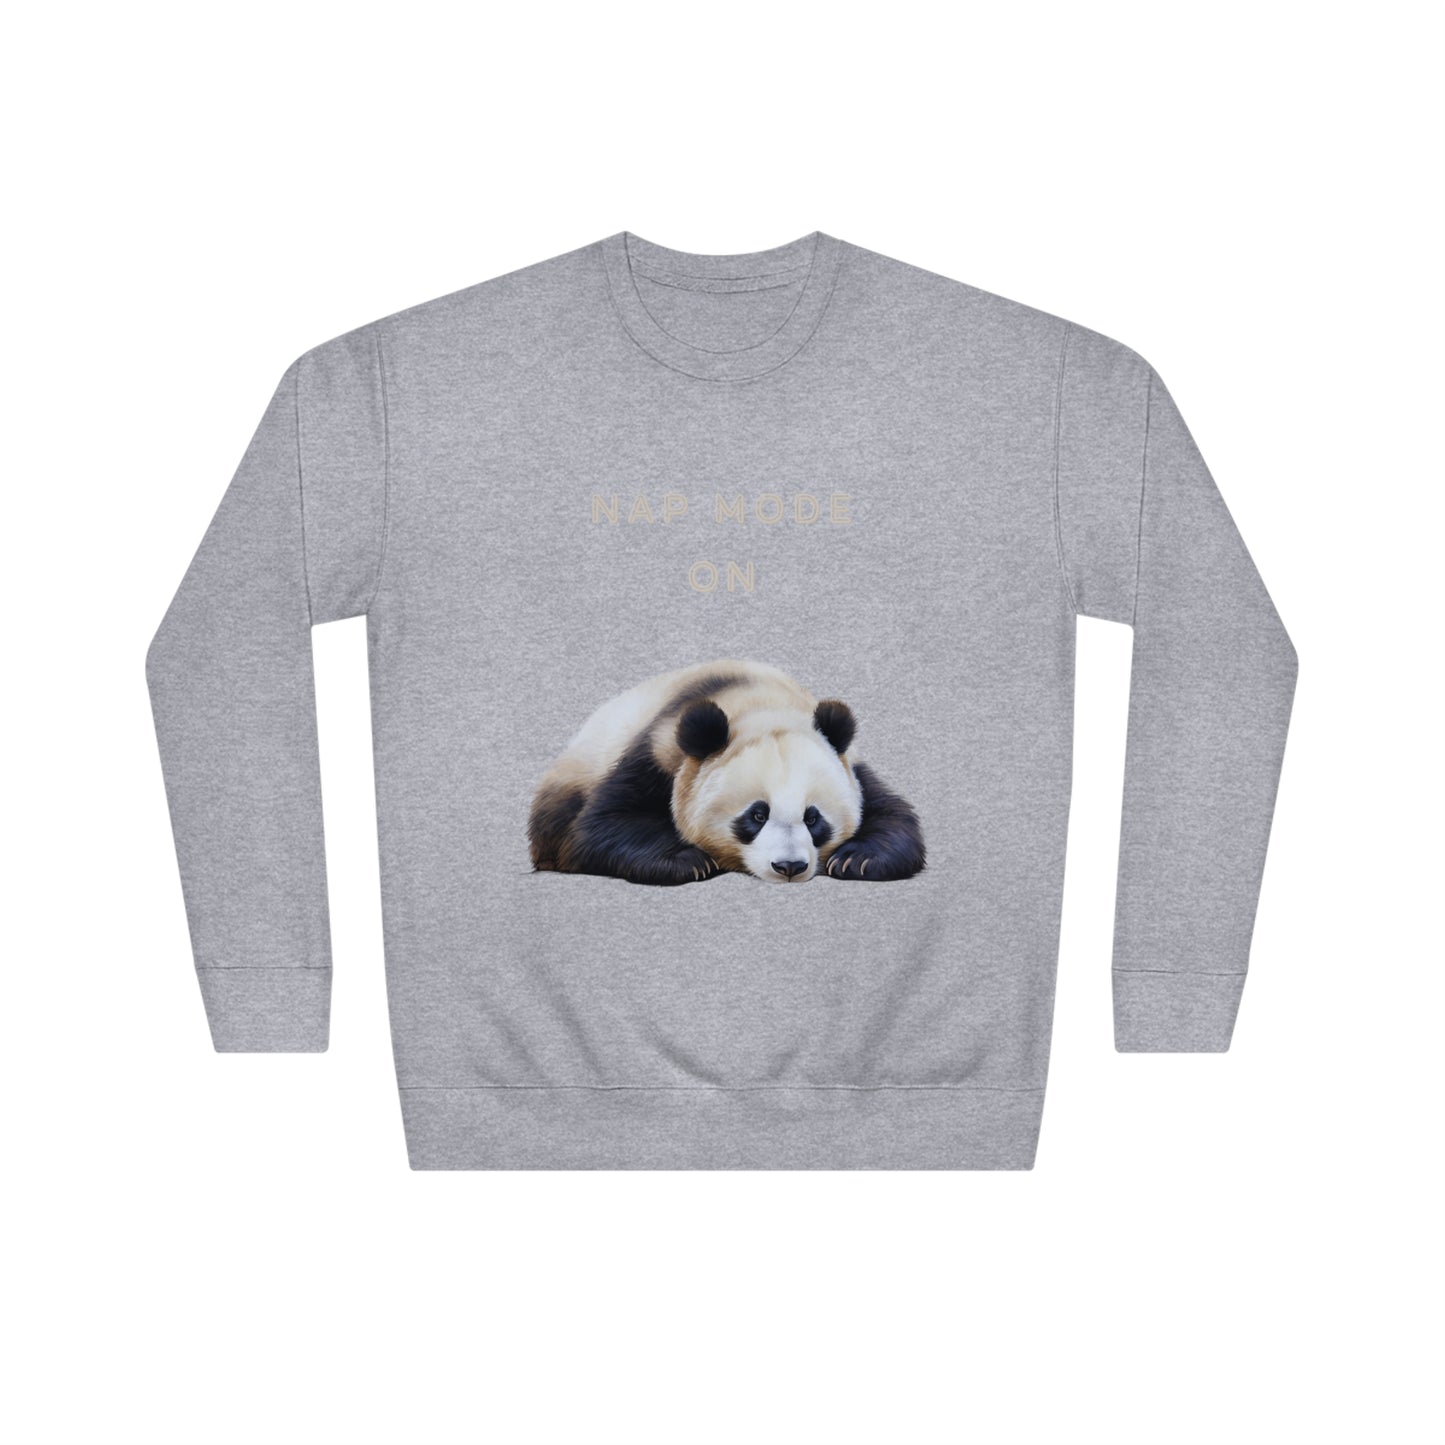 Lazy Panda Nap Mode Sweatshirt | Embrace Cozy Relaxation | Panda Lover Gifts Sweatshirt Carbon Grey S 